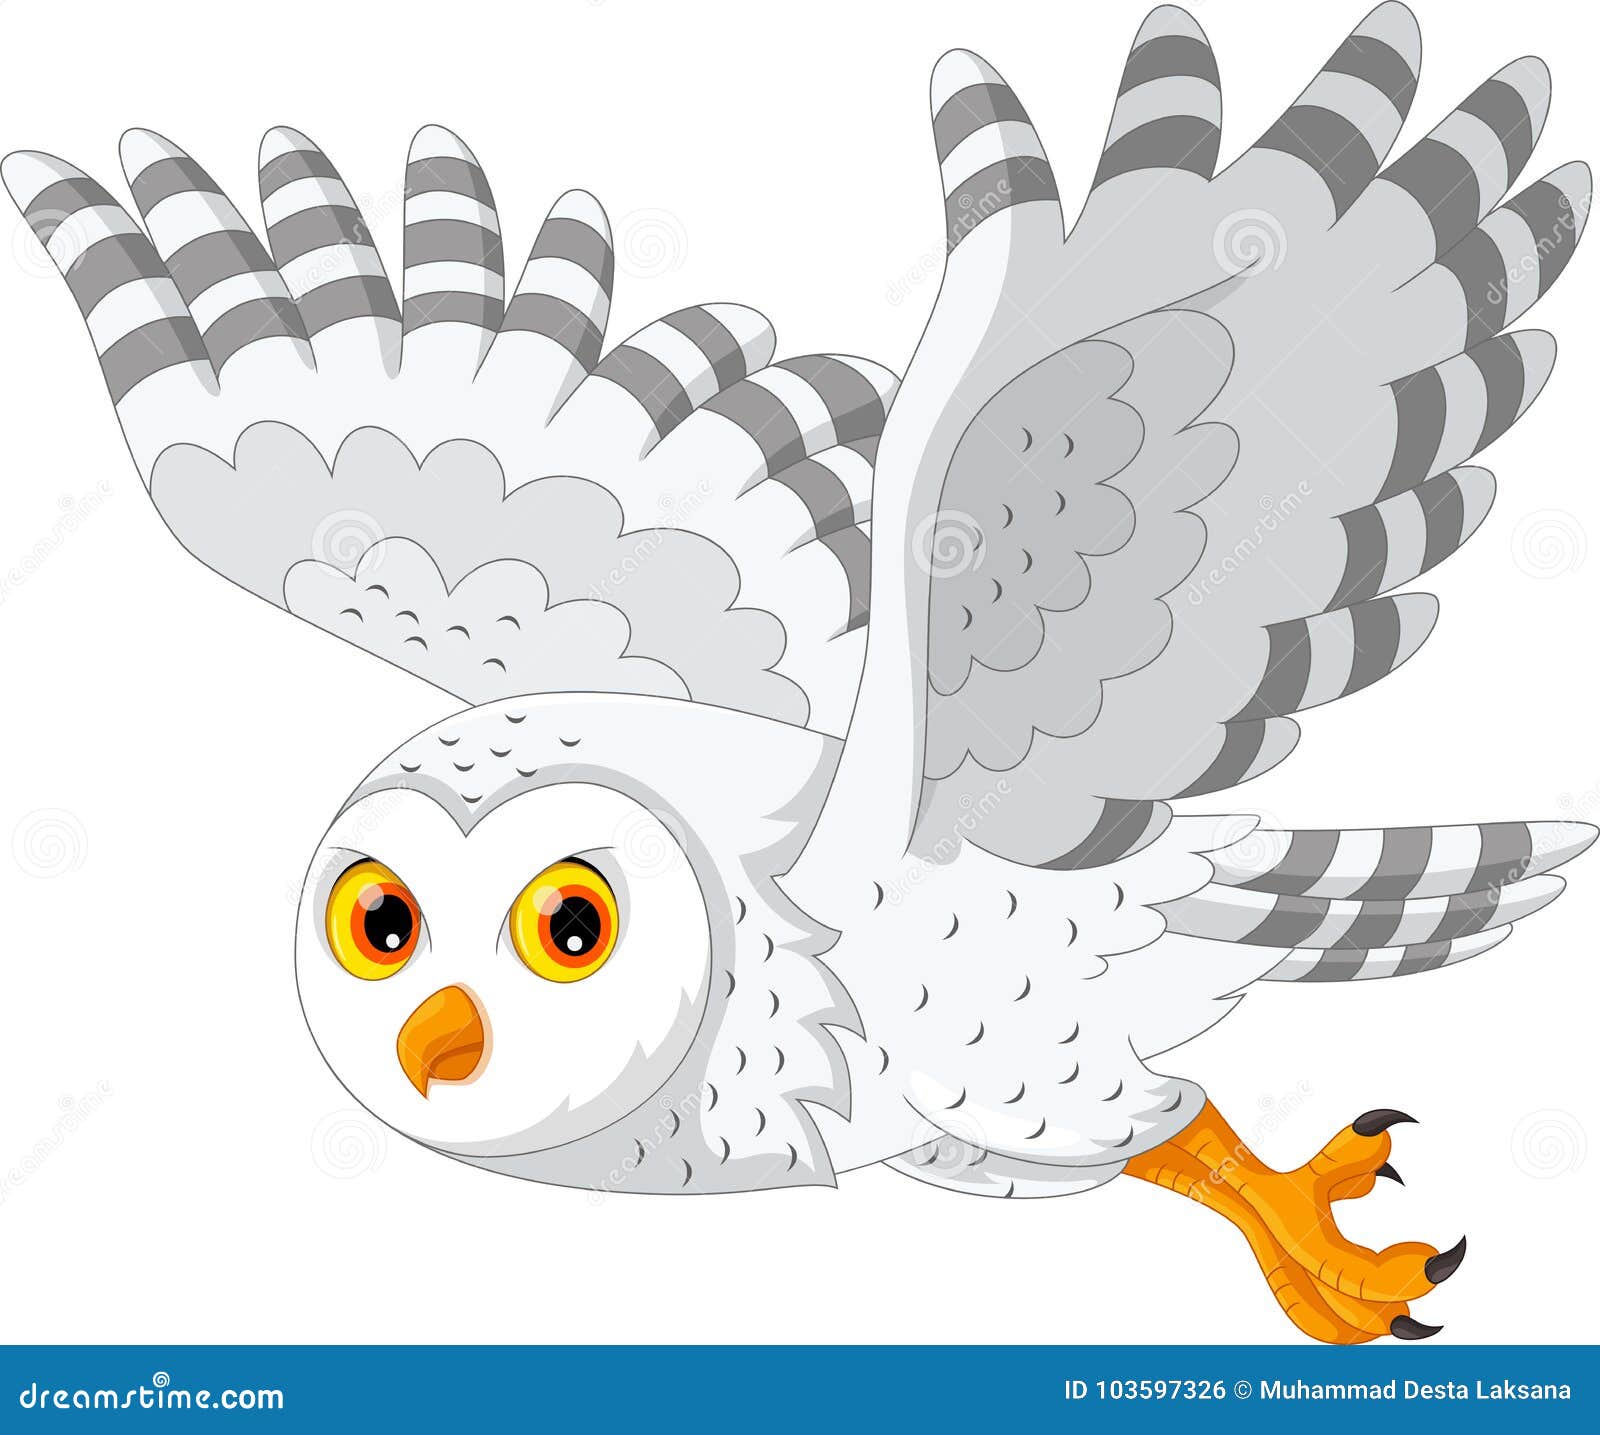 Cute Cartoon Snowy Owl Flying Stock Illustration - Illustration of cute,  fauna: 103597326